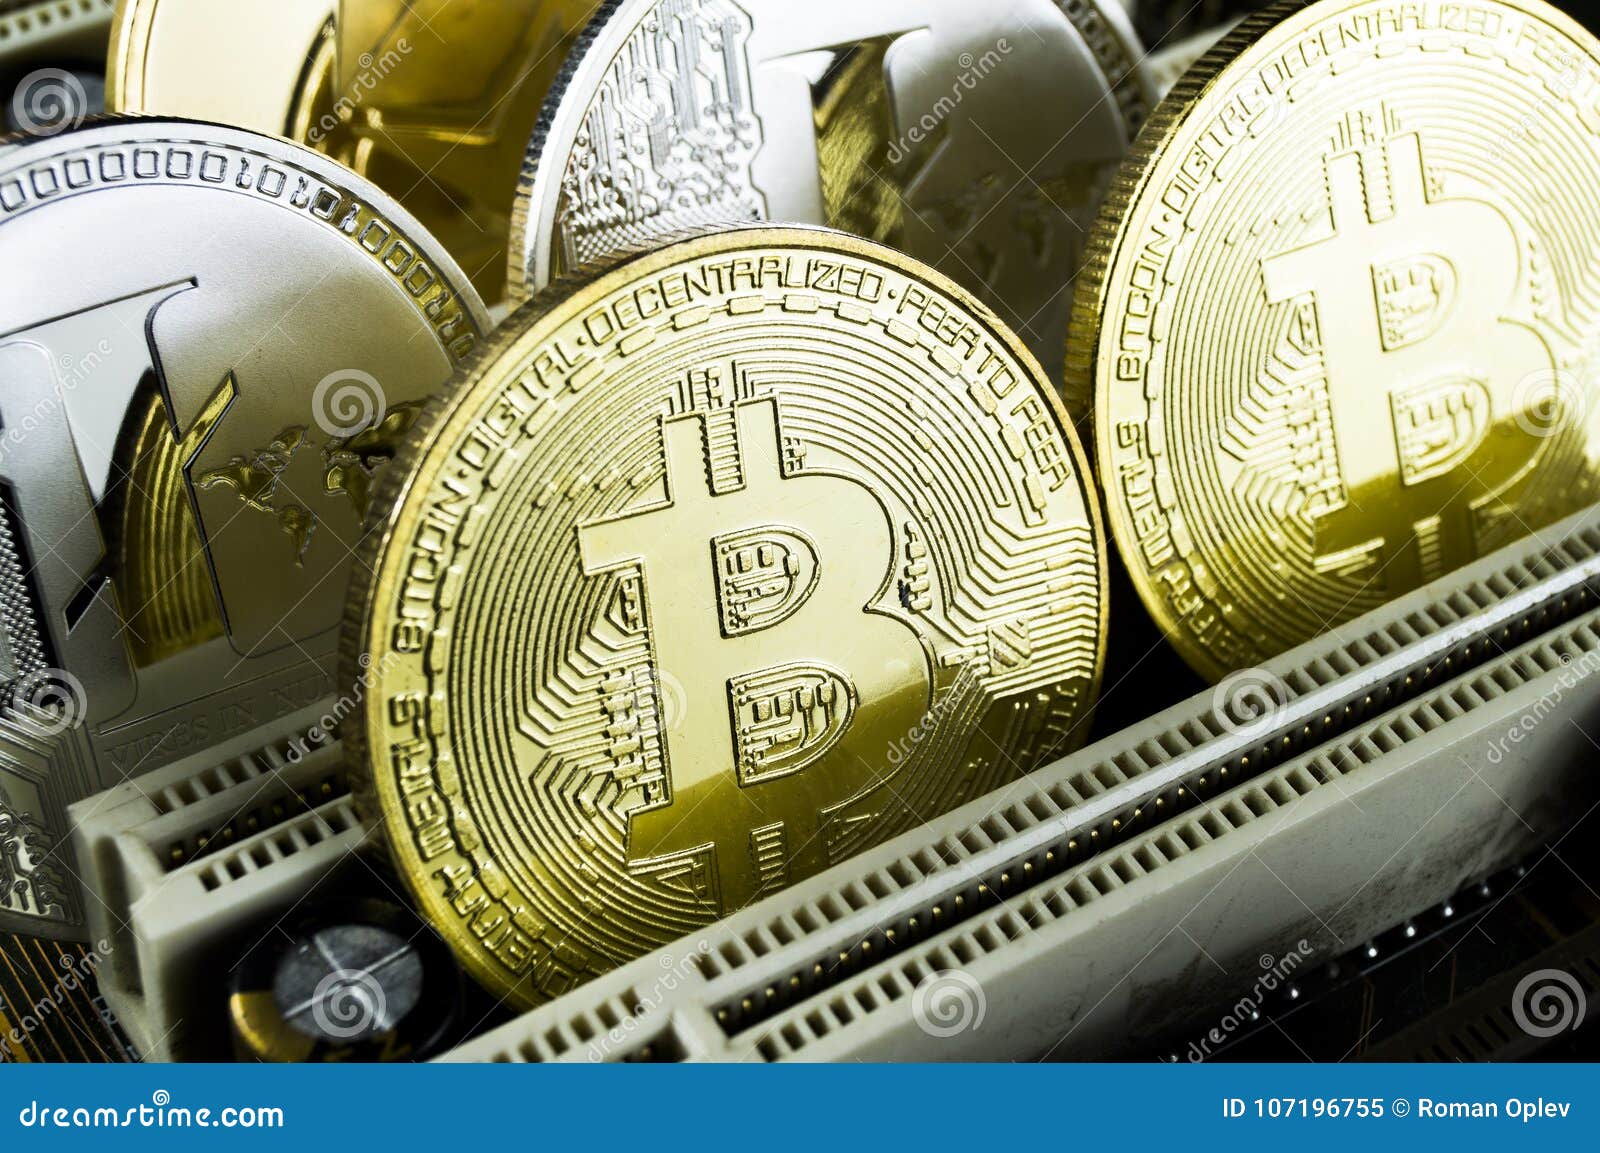 exchange bitcoin for litecoin